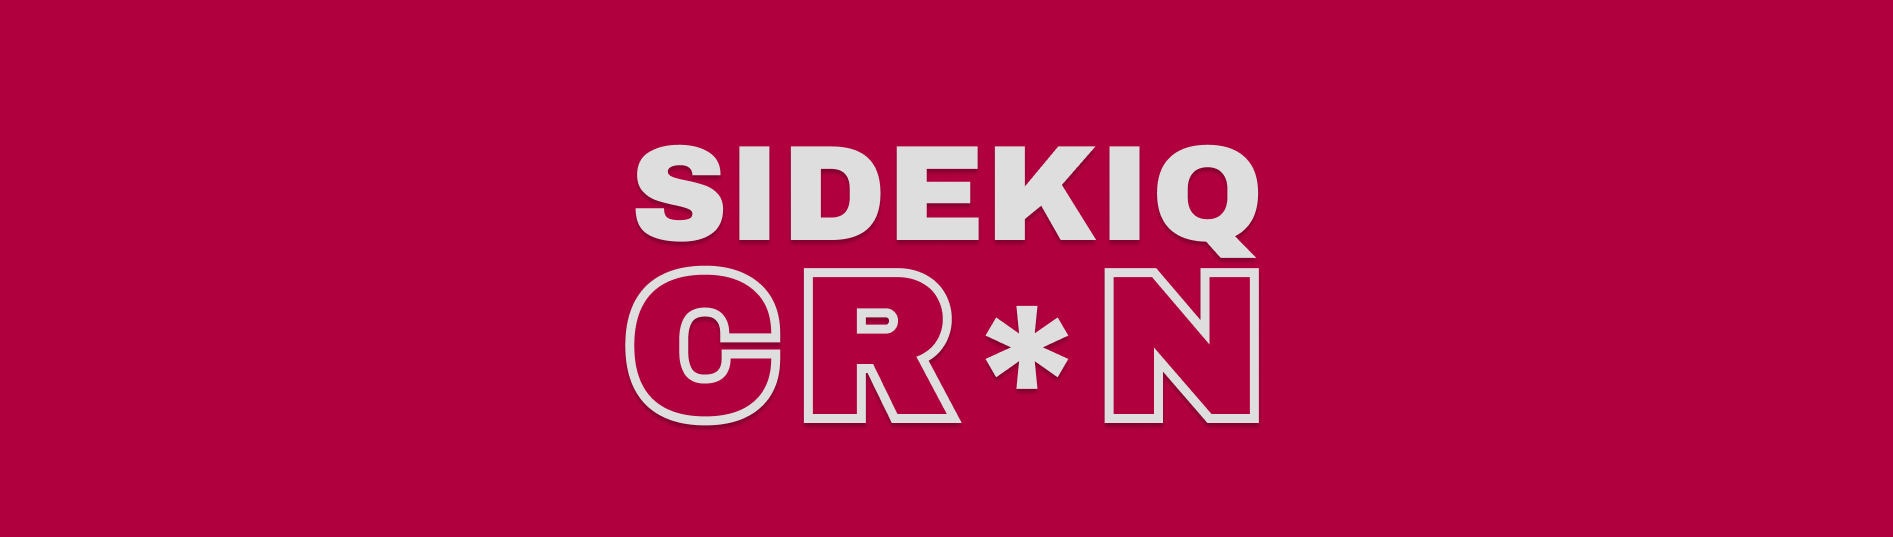 Sidekiq-Cron